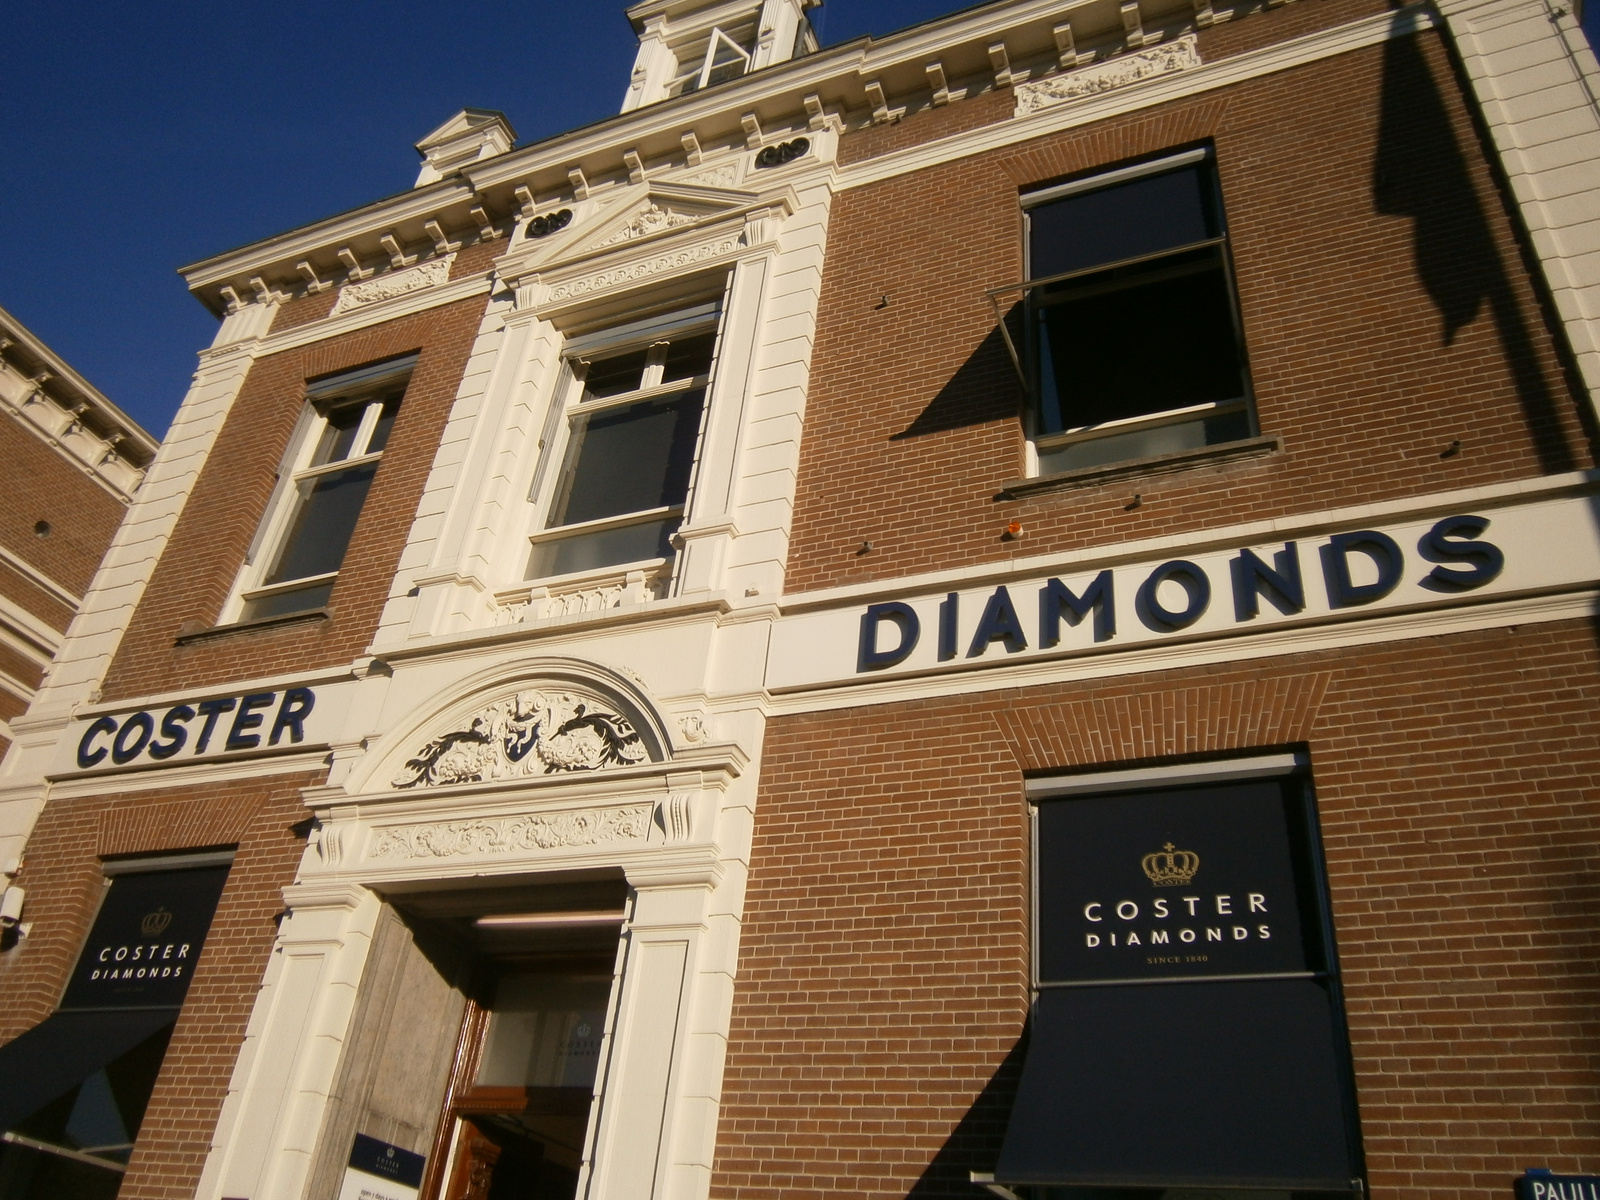 84 Day 7 Amsterdam, famous diamond manufacturer